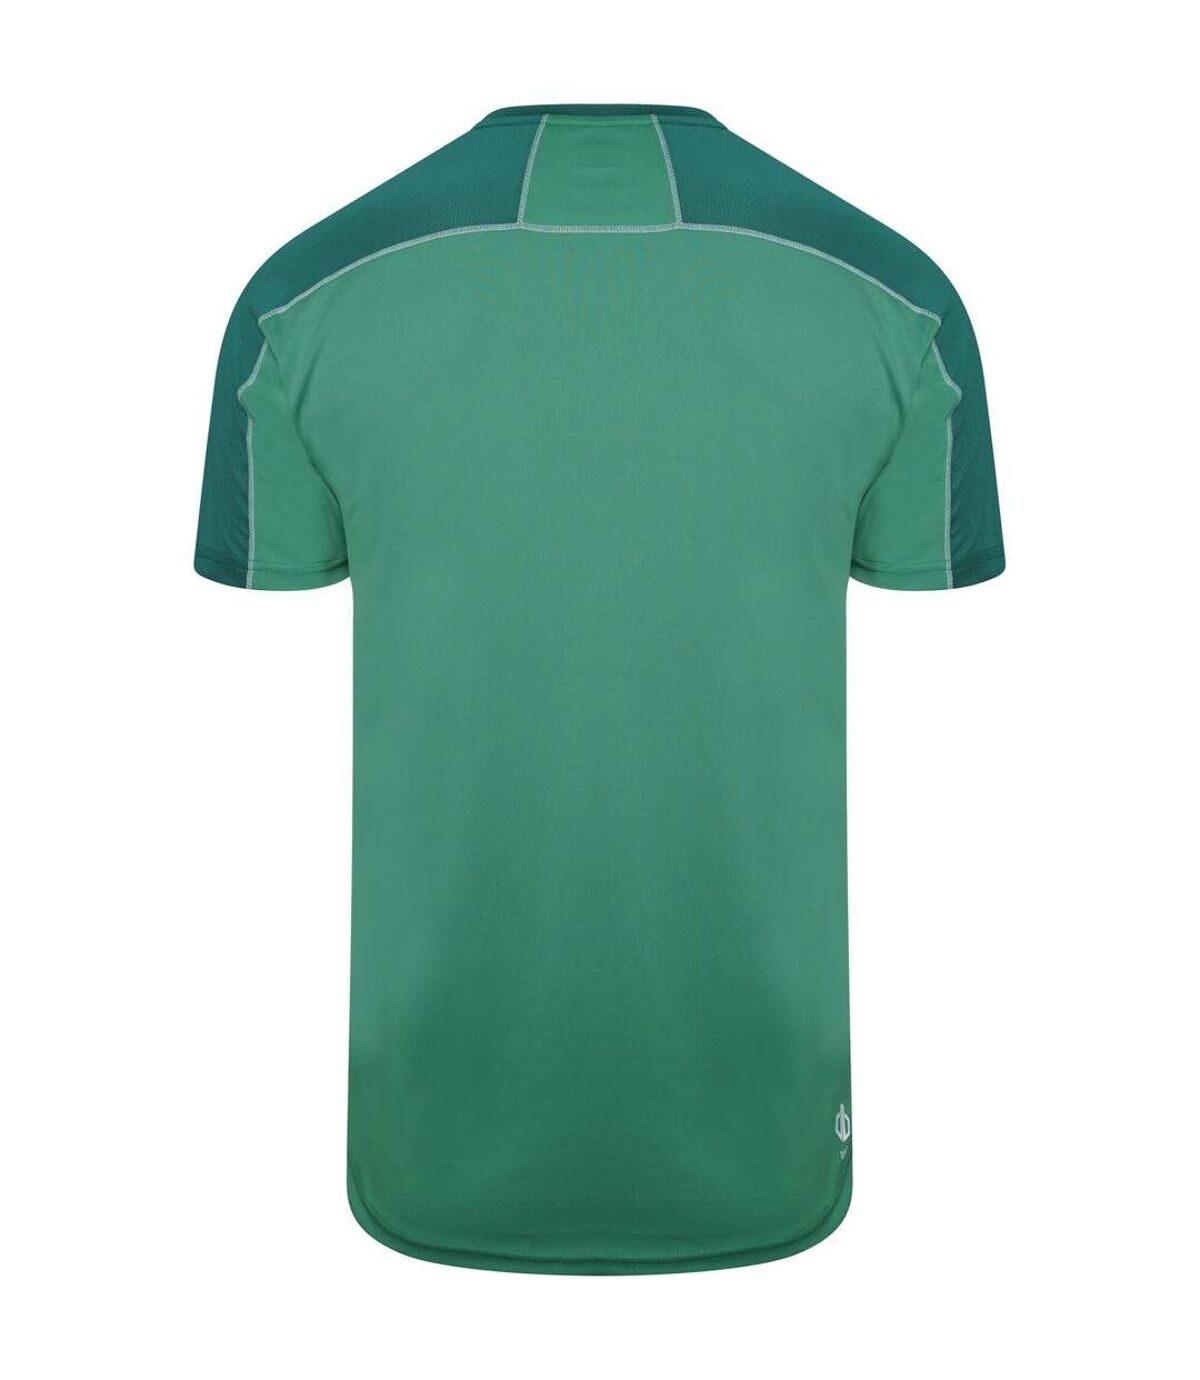 Dare 2B - T-shirt DISCERNIBLE - Homme (Vert jade / Vert sarcelle) - UTRG5850